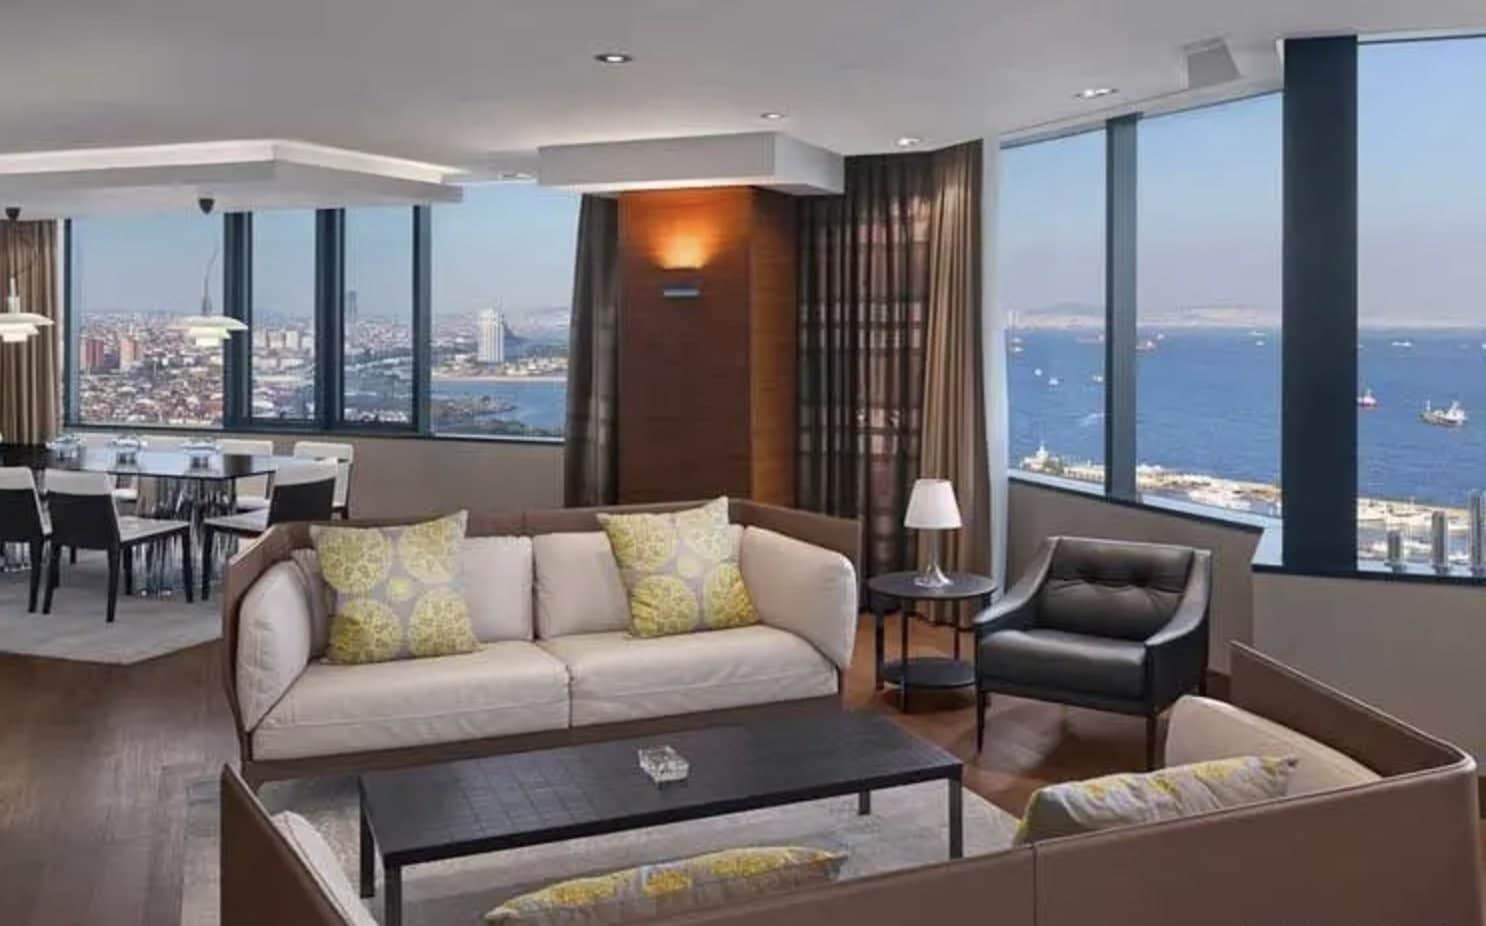 Обеденная зона с видом в отеле Sheraton в Стамбуле